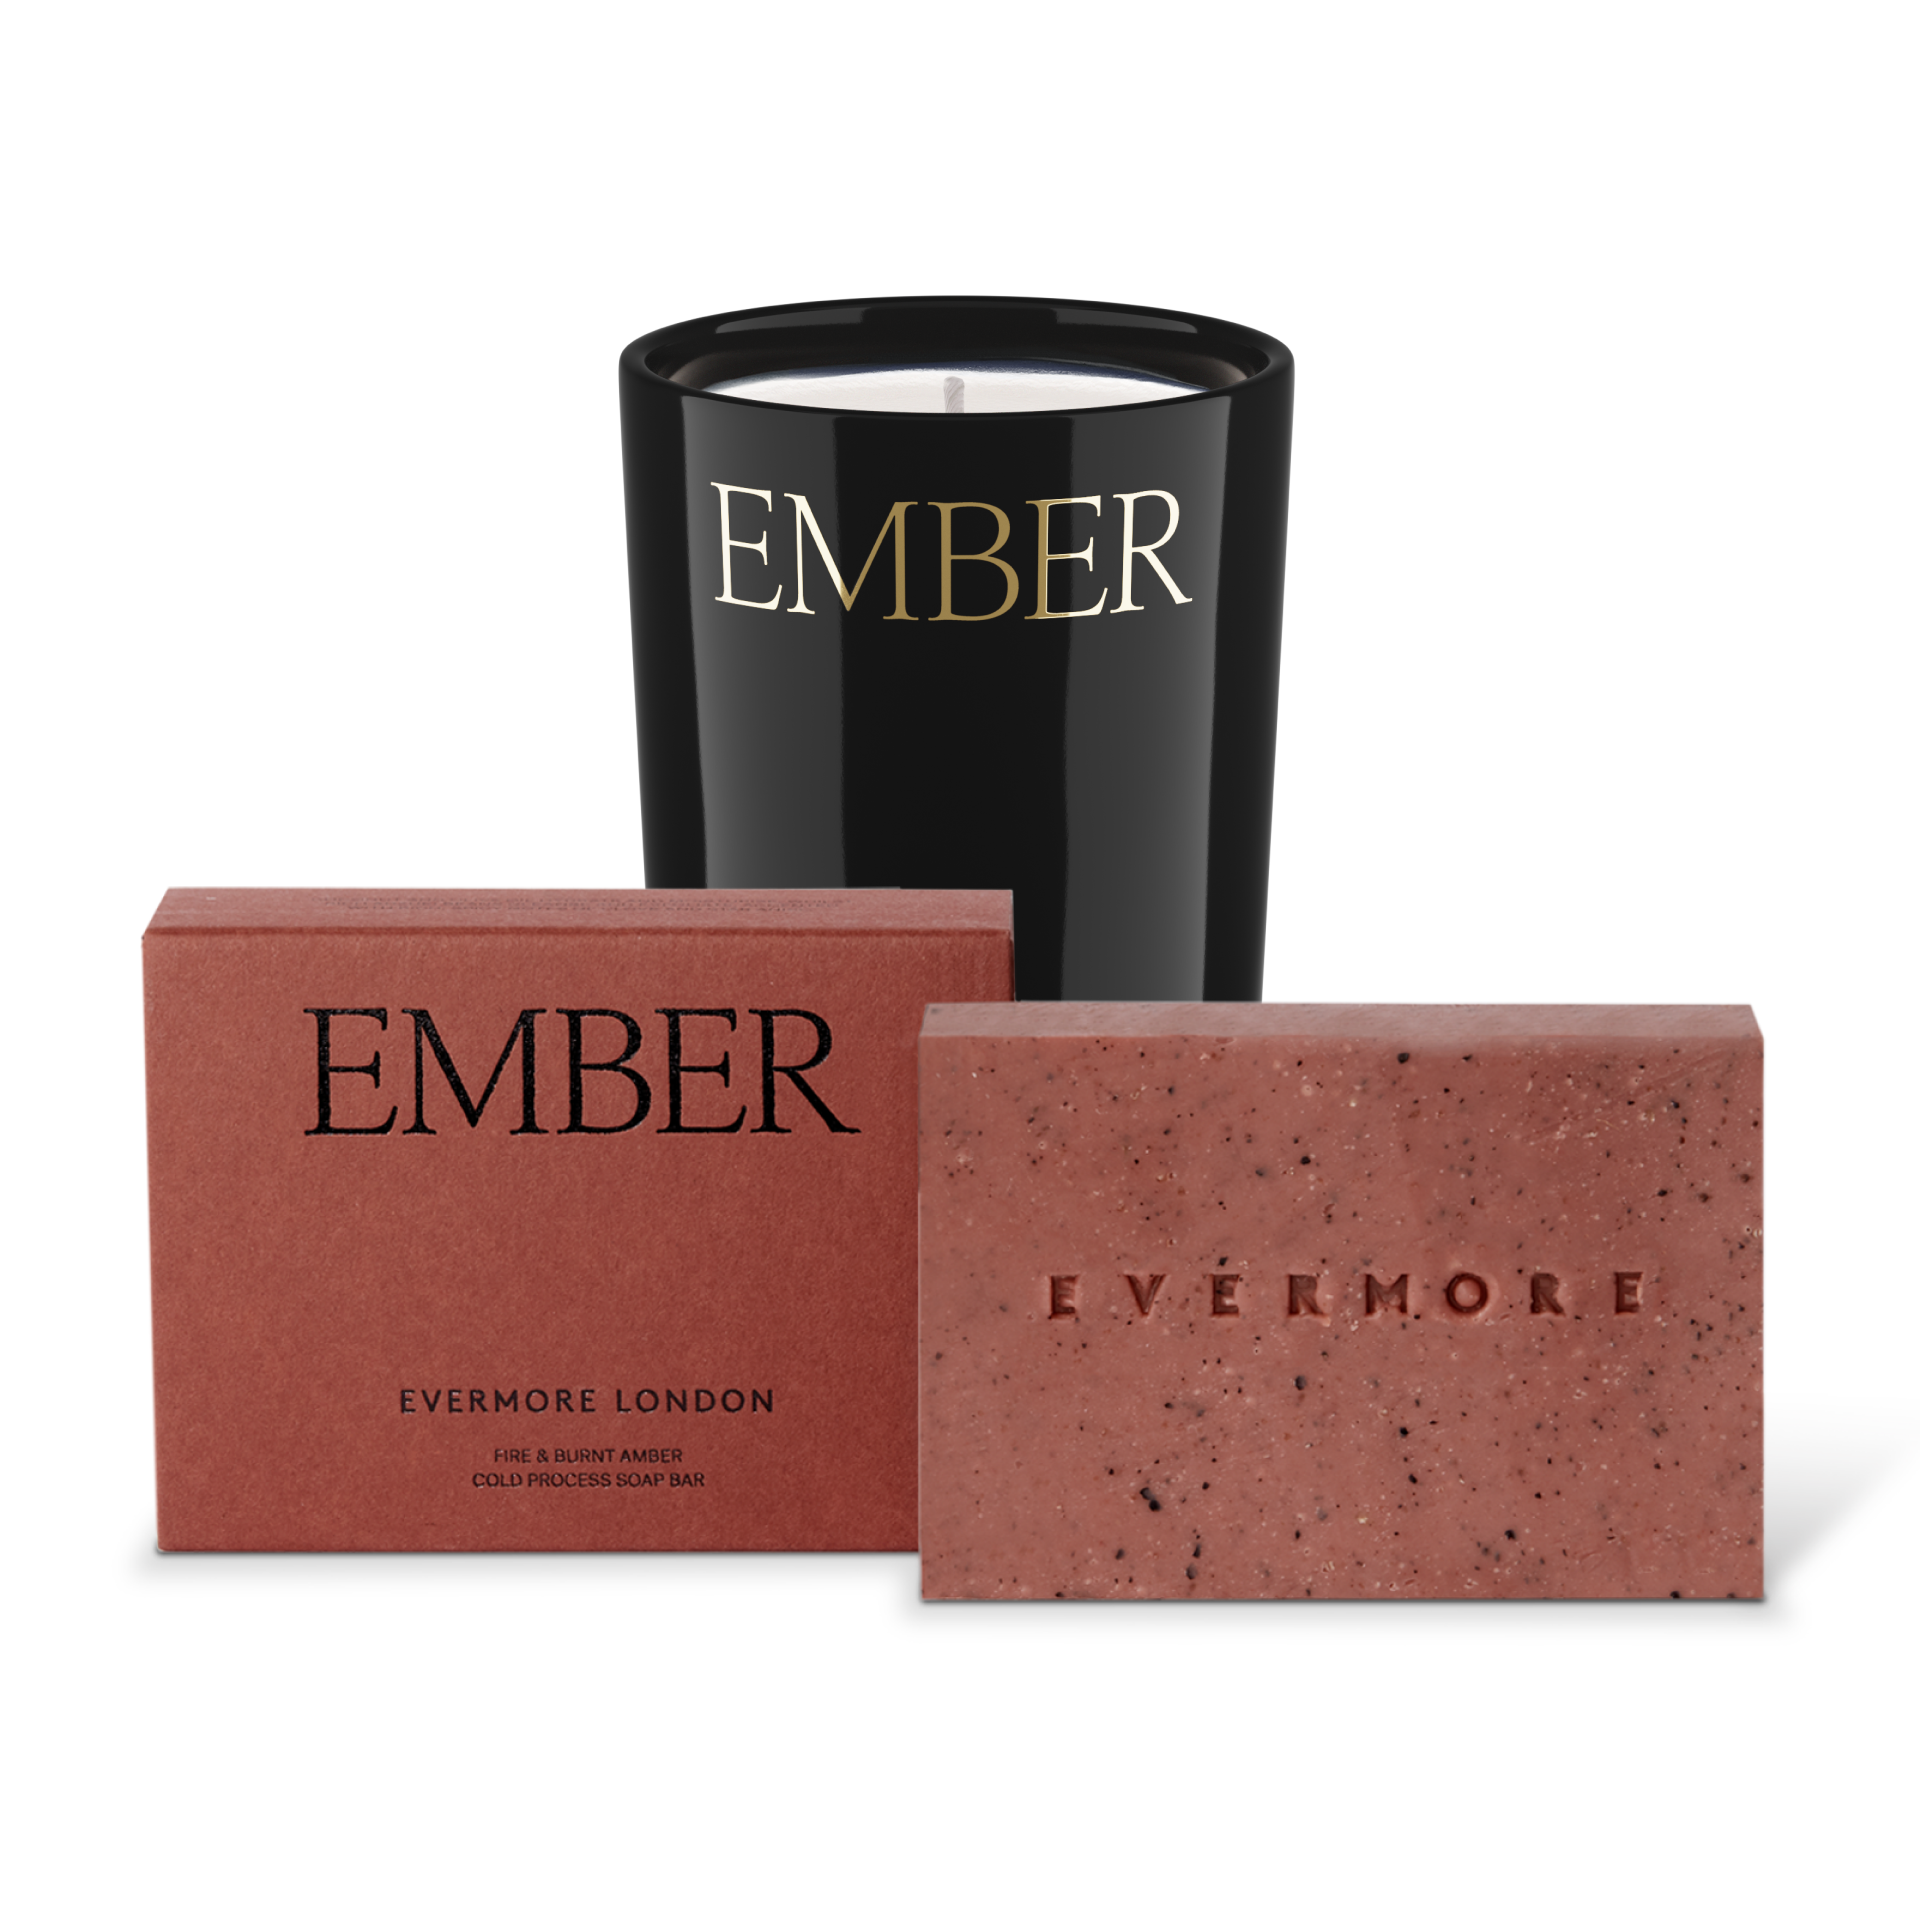 Evermore Ember Bundle - save 20%